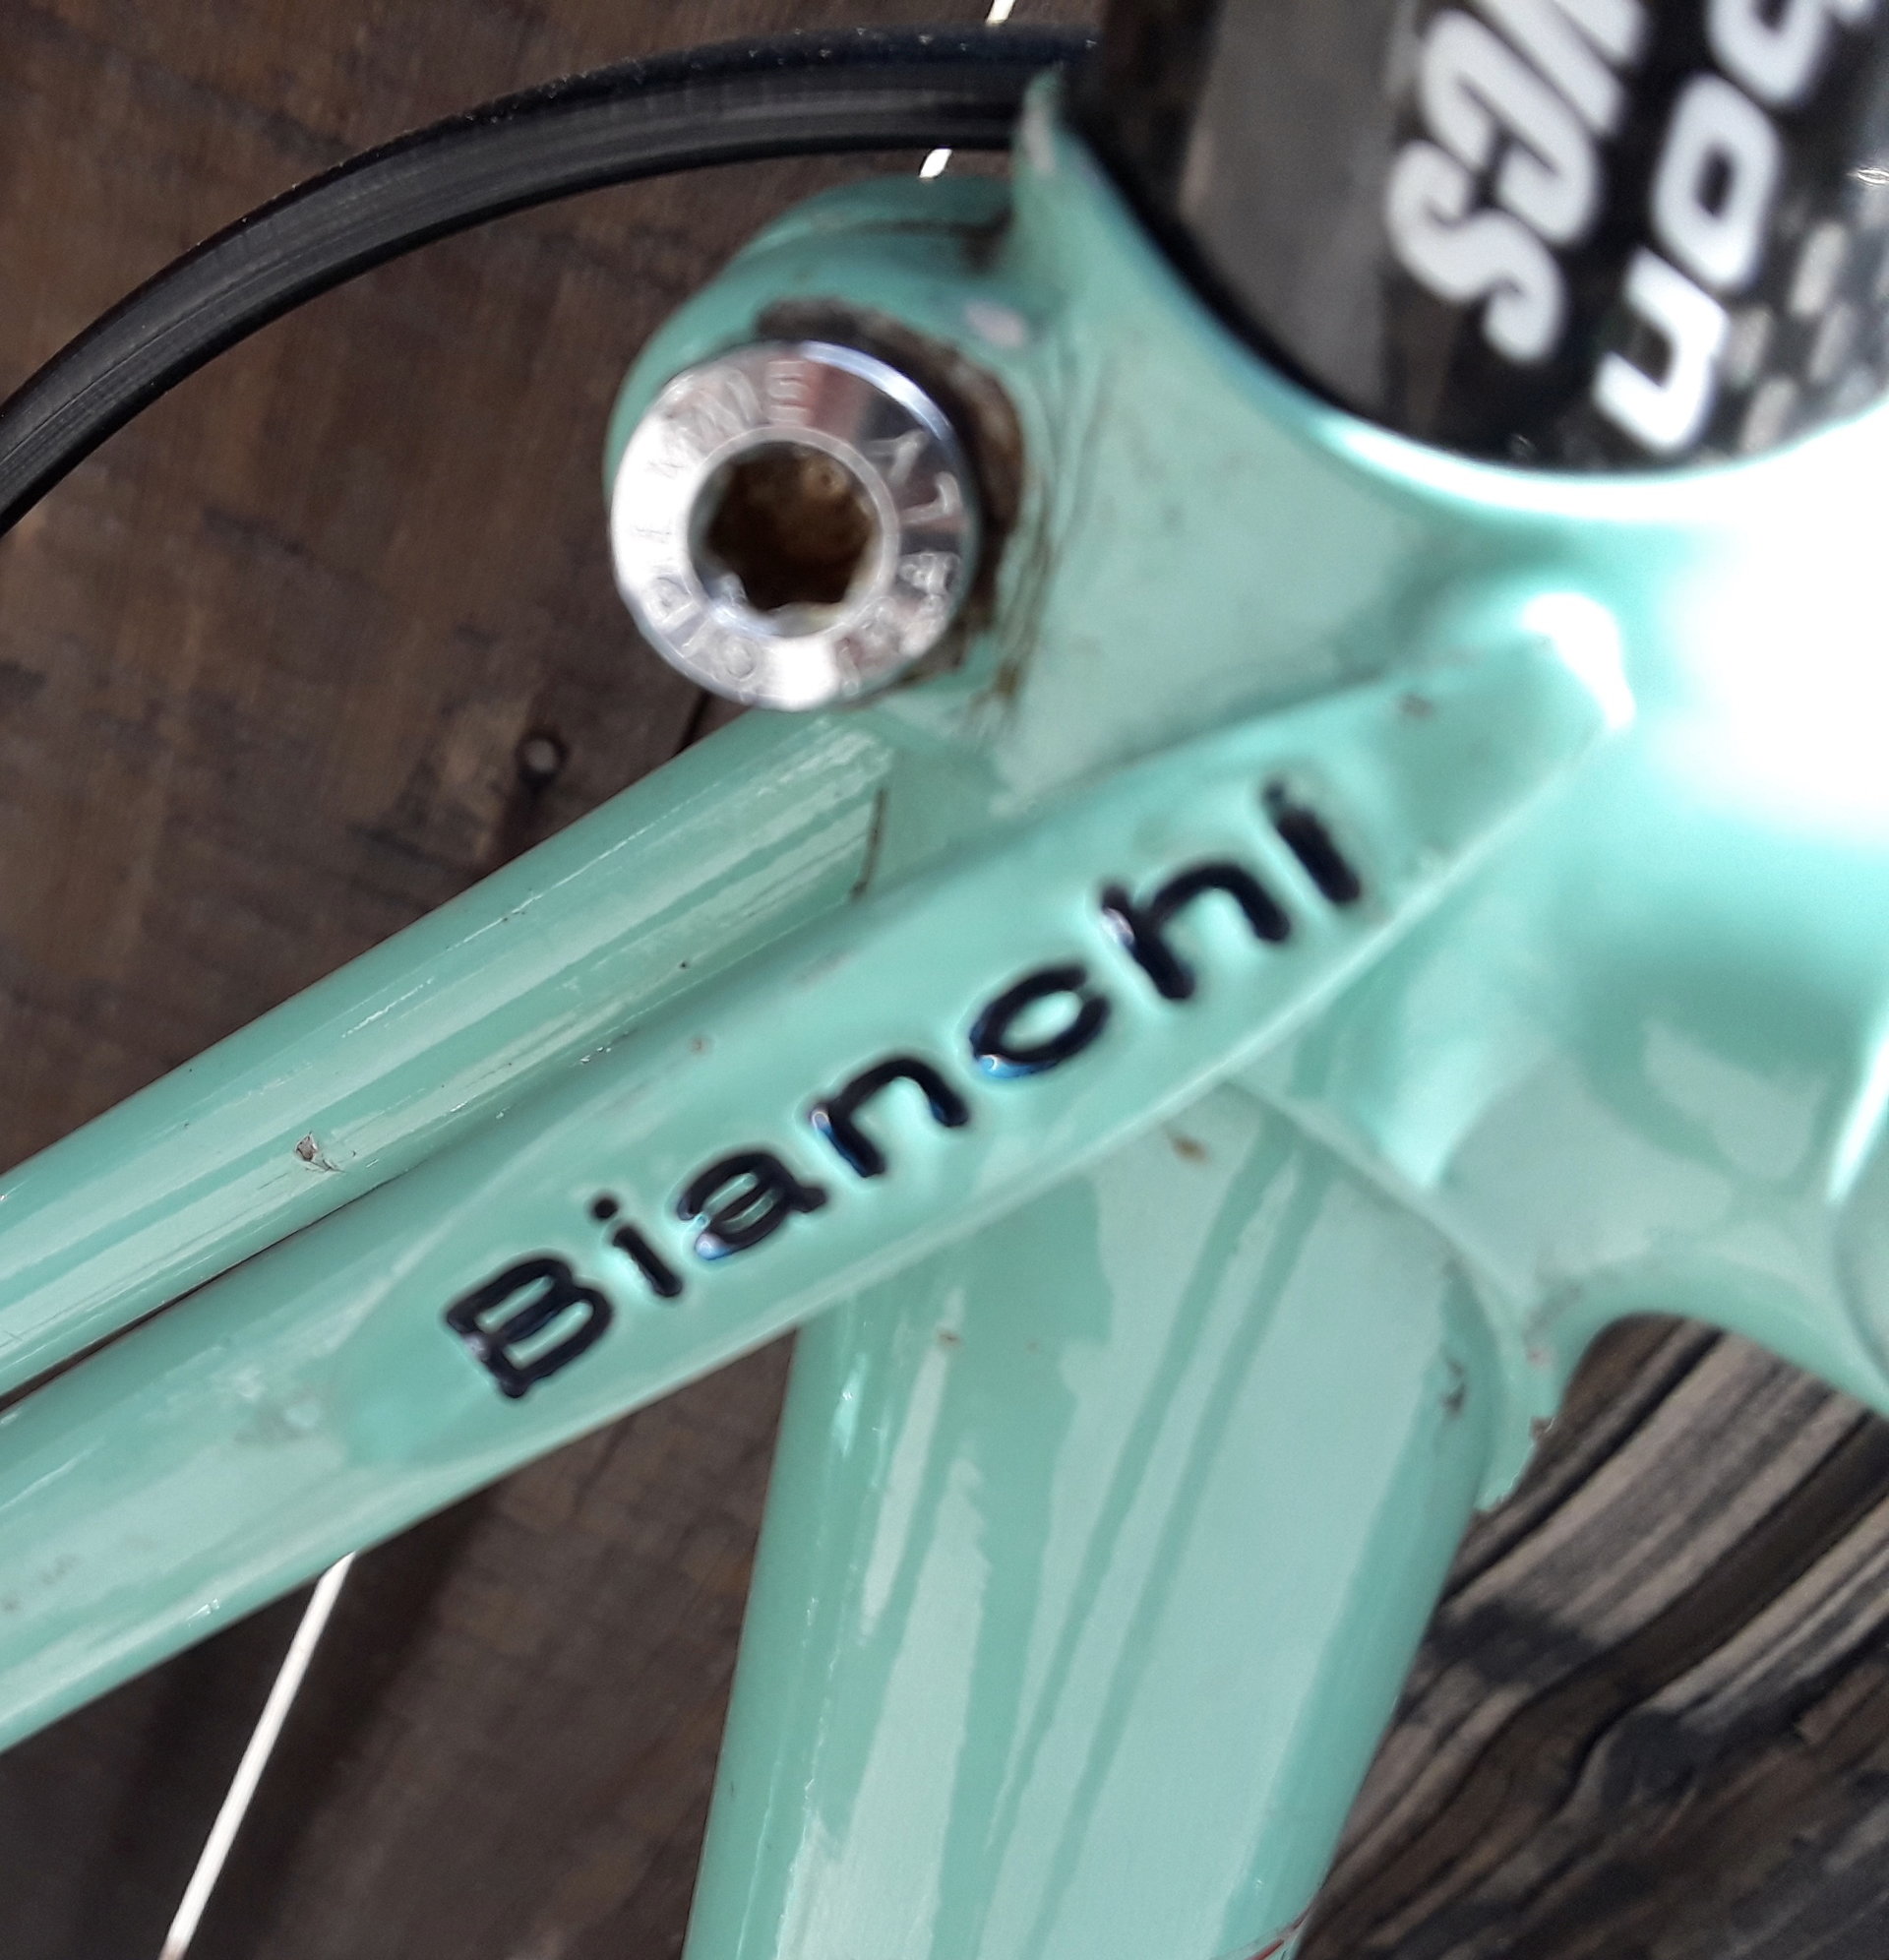 Kit adesivi compatibili  Bianchi Rekord 848 12 v decals